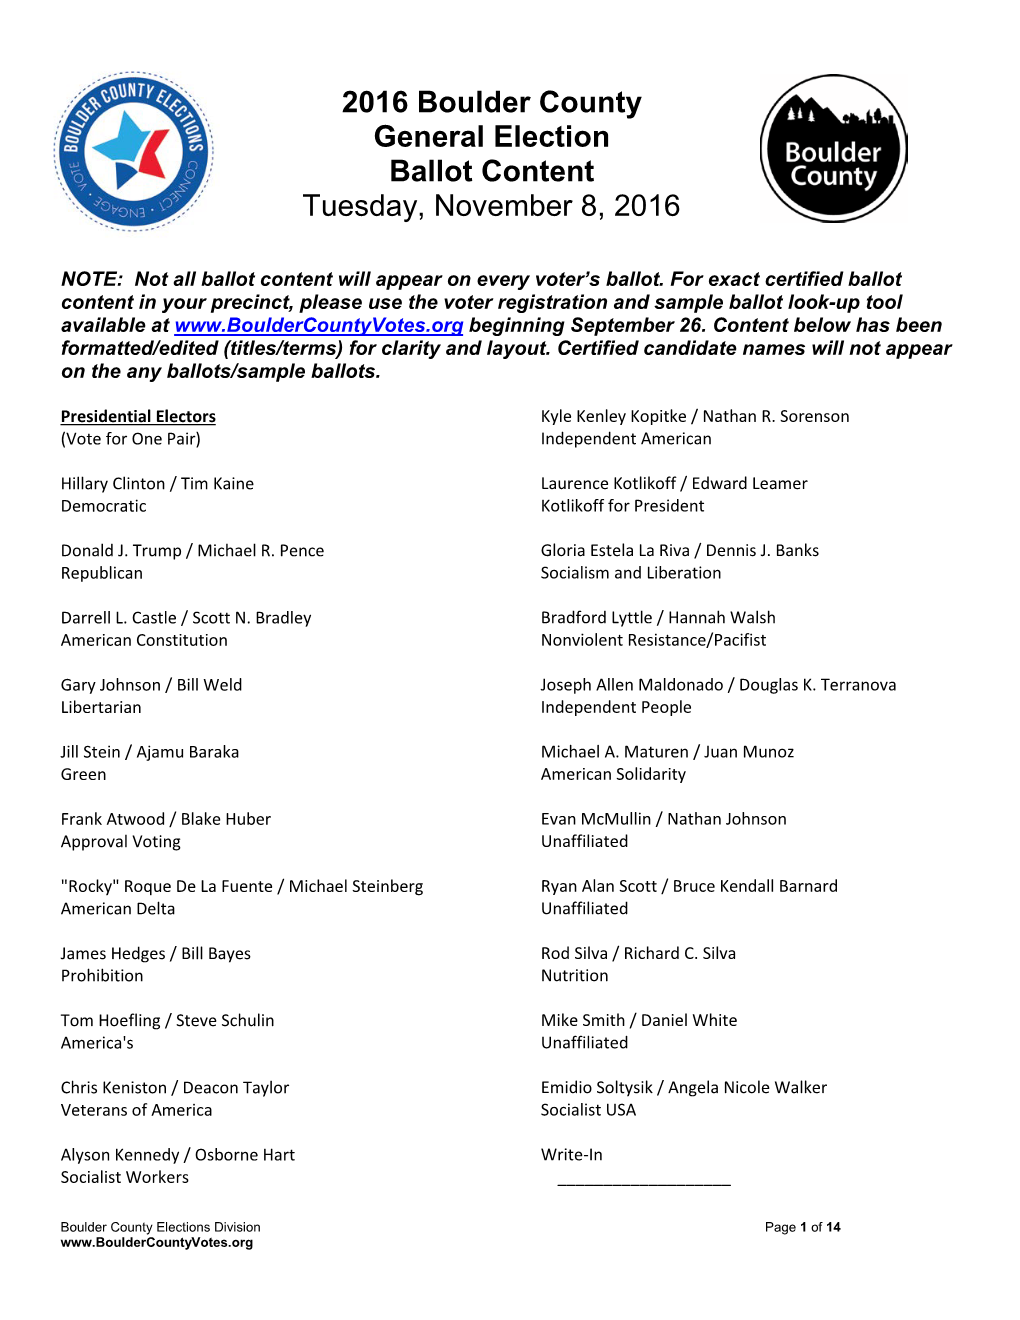 2016 Boulder County General Election Ballot Content Tuesday, November 8, 2016